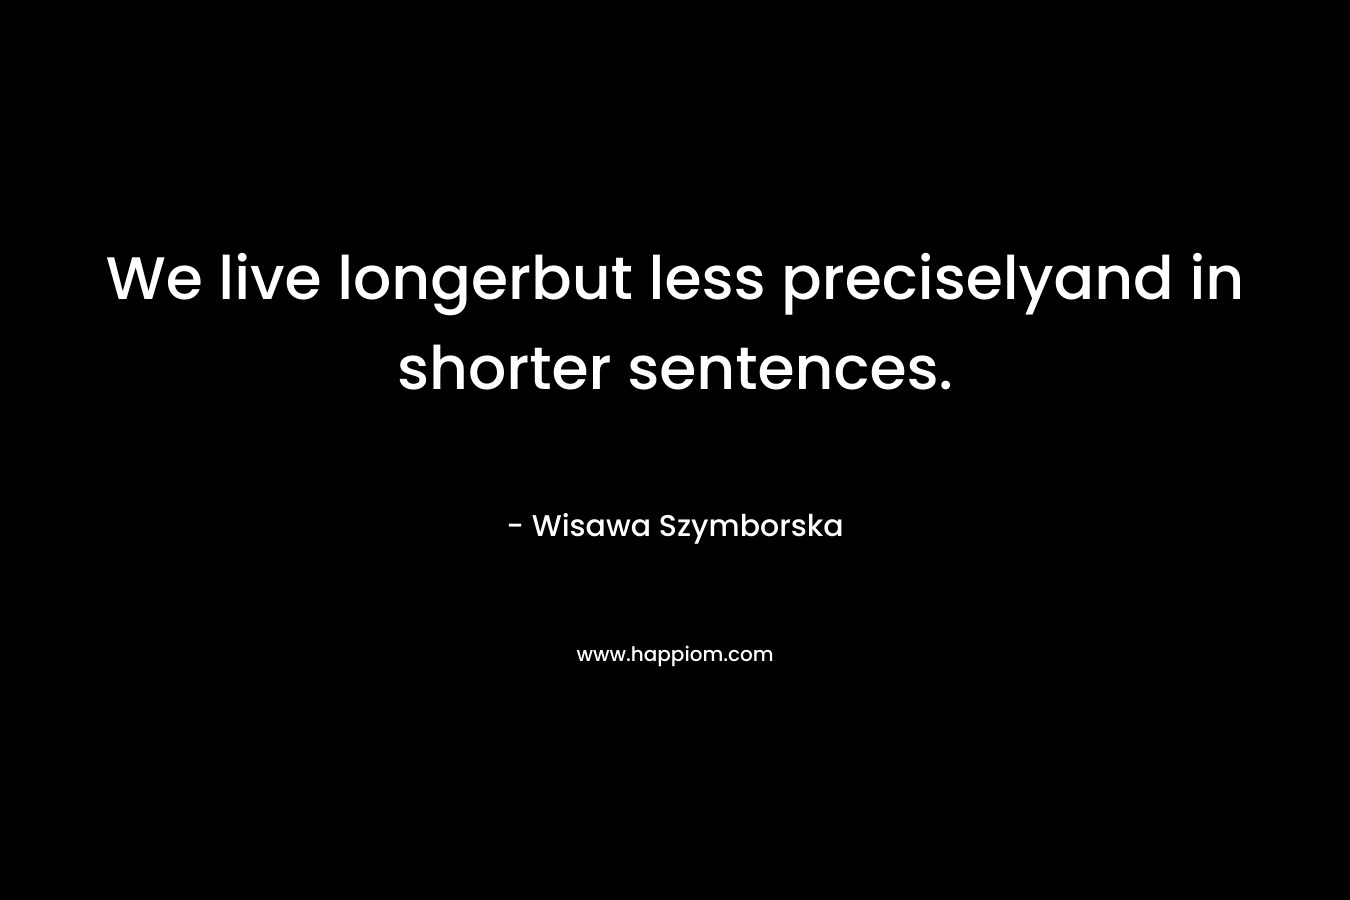 We live longerbut less preciselyand in shorter sentences.